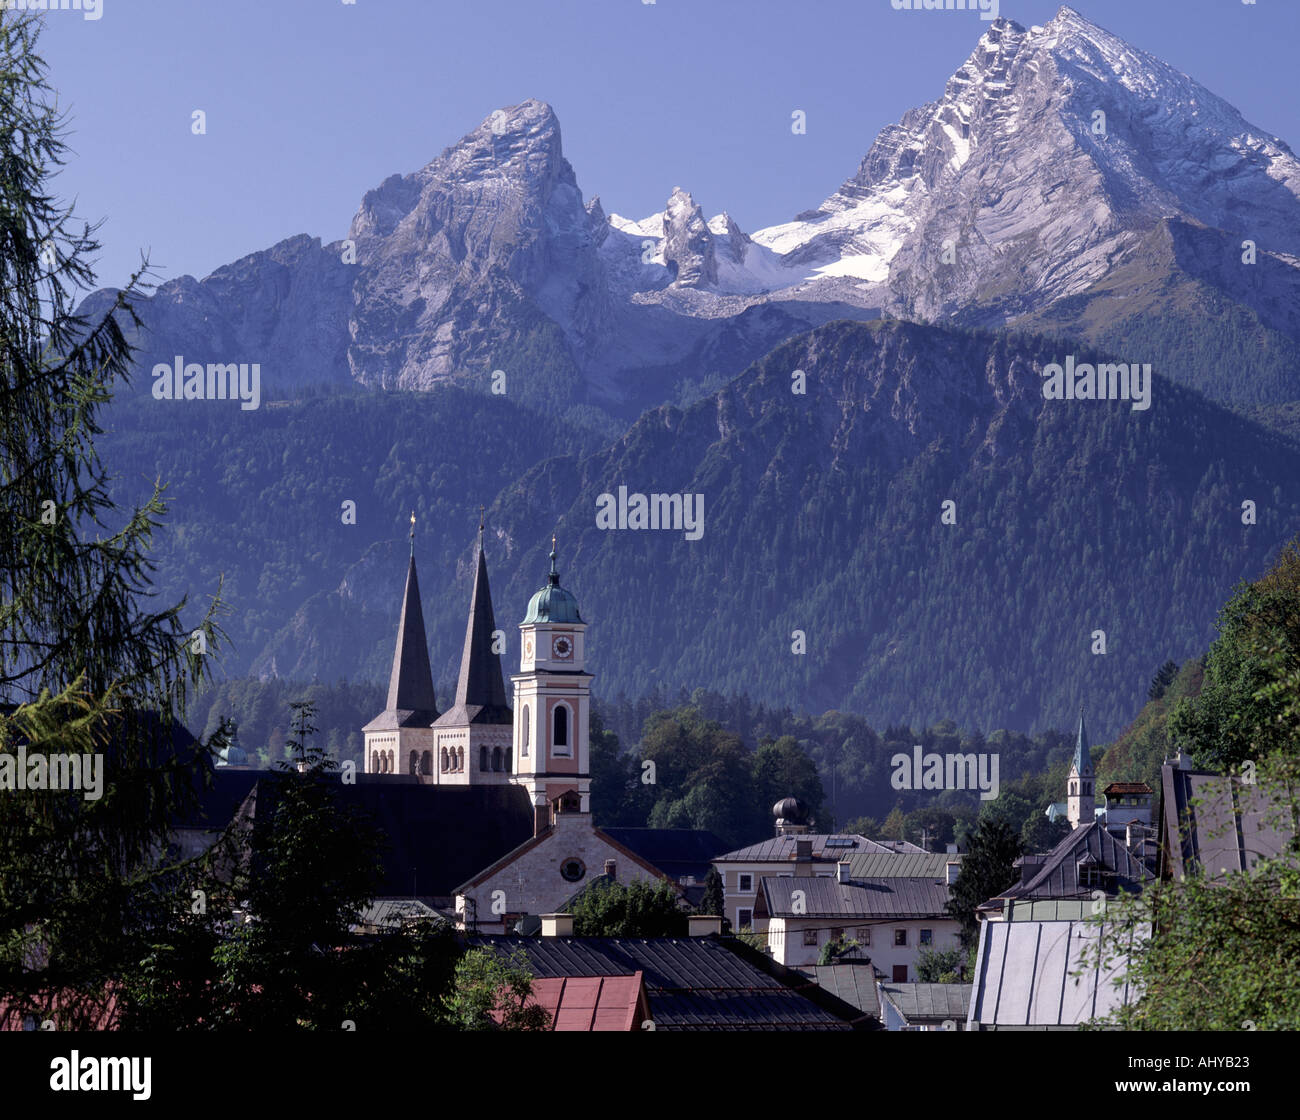 Germany Berchtesgadner Land Berchtesgaden and the Alp of the Watzman Stock Photo